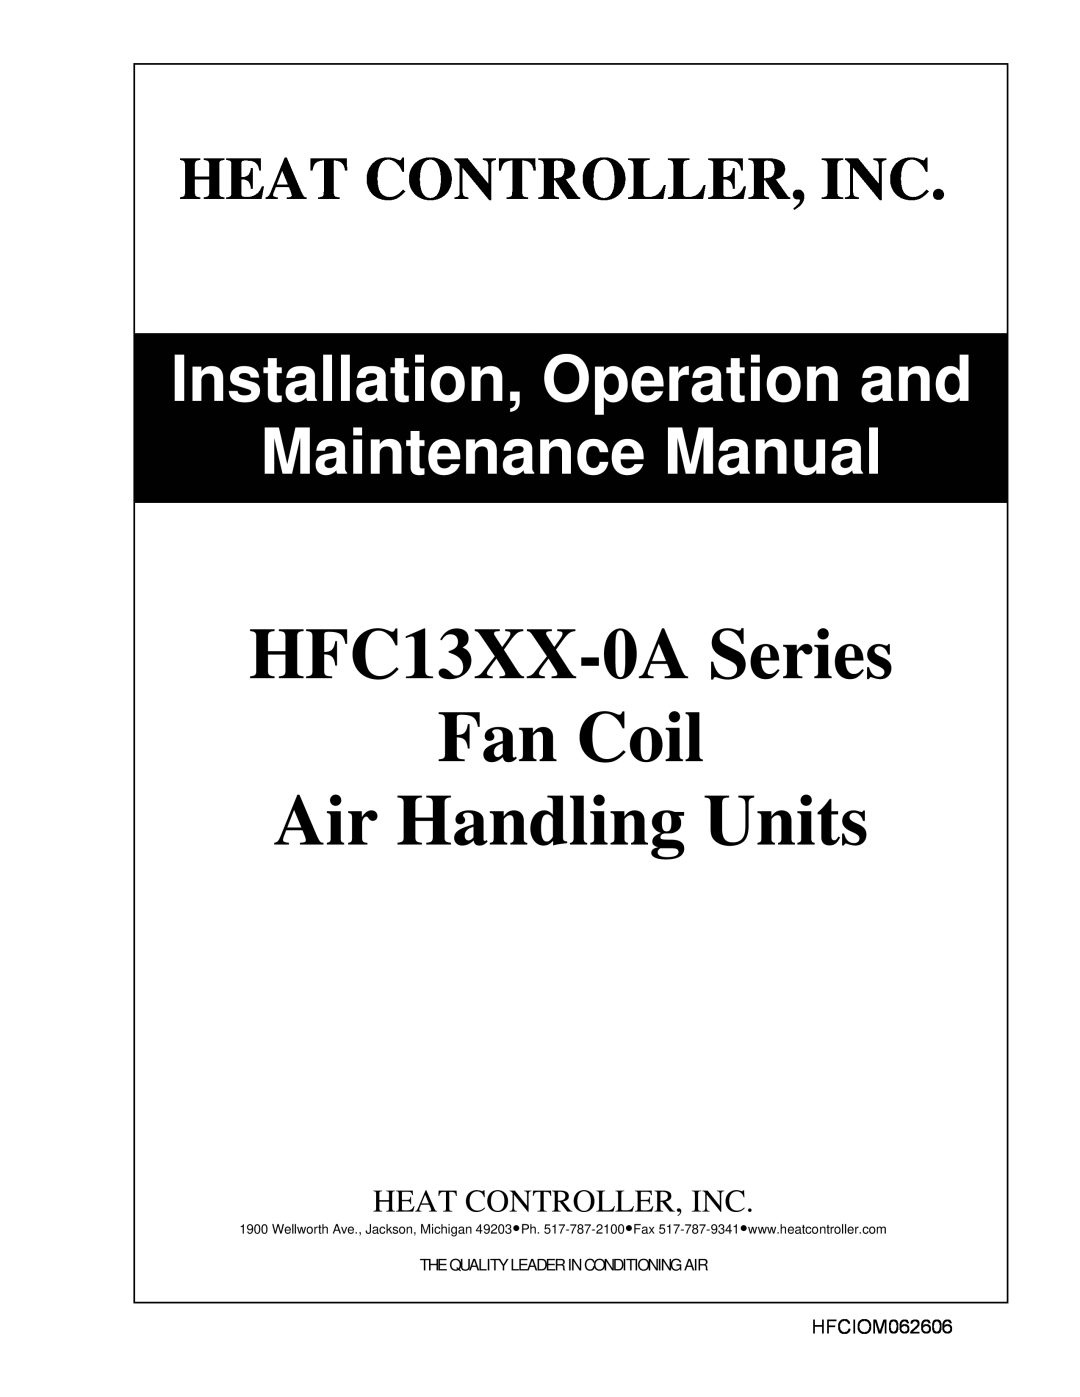 Heat Controller manual HFCIOM062606, HFC13XX-0ASeries Fan Coil Air Handling Units, Heat Controller, Inc 